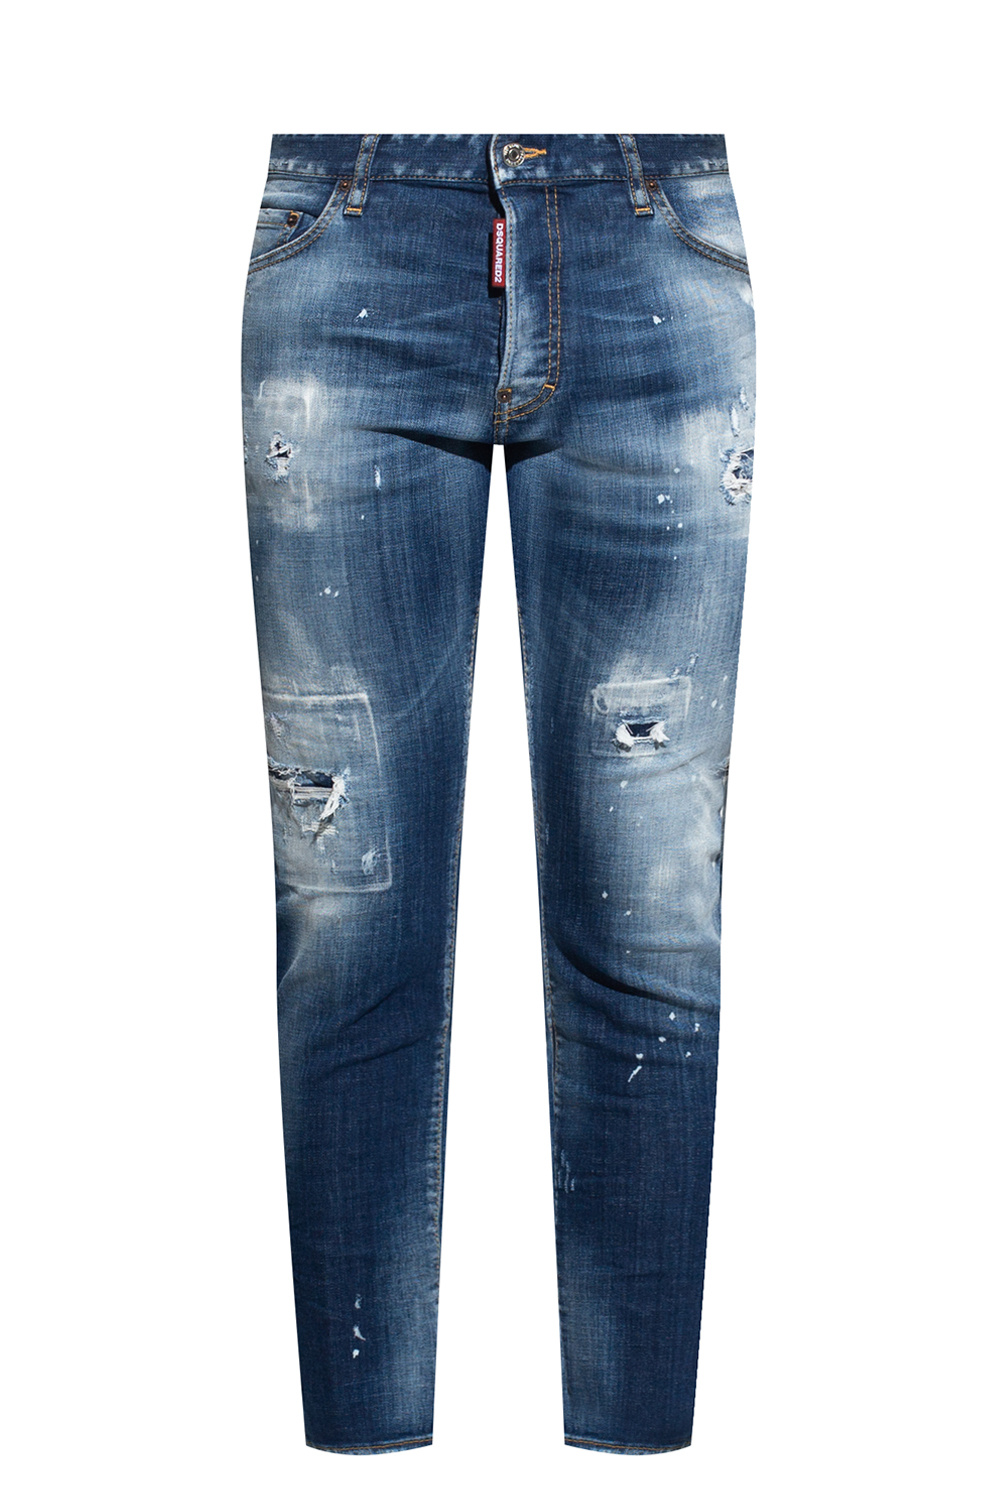 Dsquared2 'Frame Denim Le Skinny Flare Mid-Rise Jeans